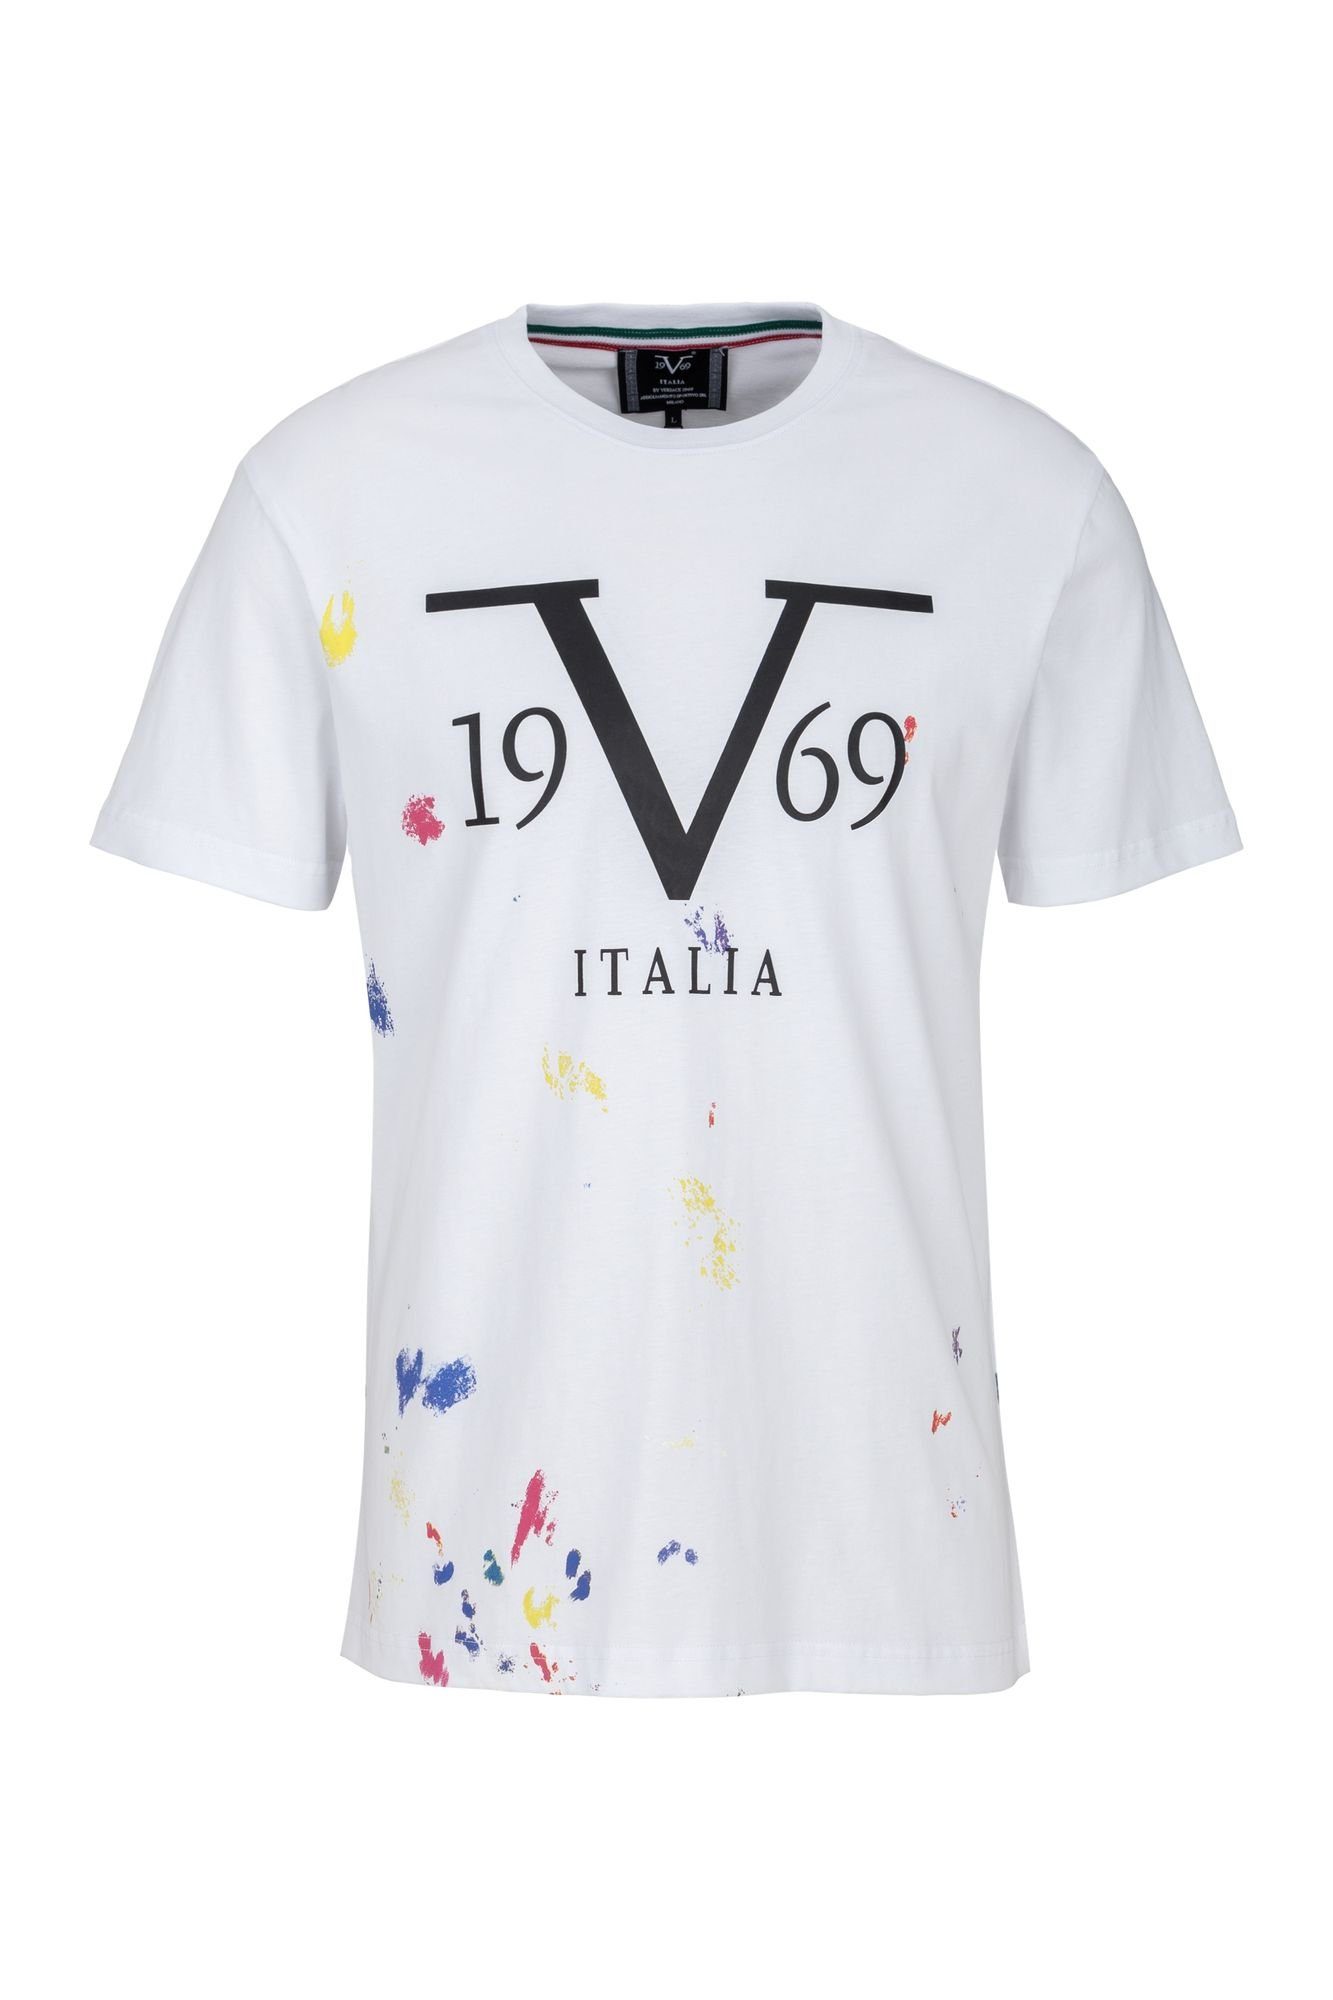 19V69 Italia by Versace Rundhalsshirt by Versace Sportivo SRL - Leonardo